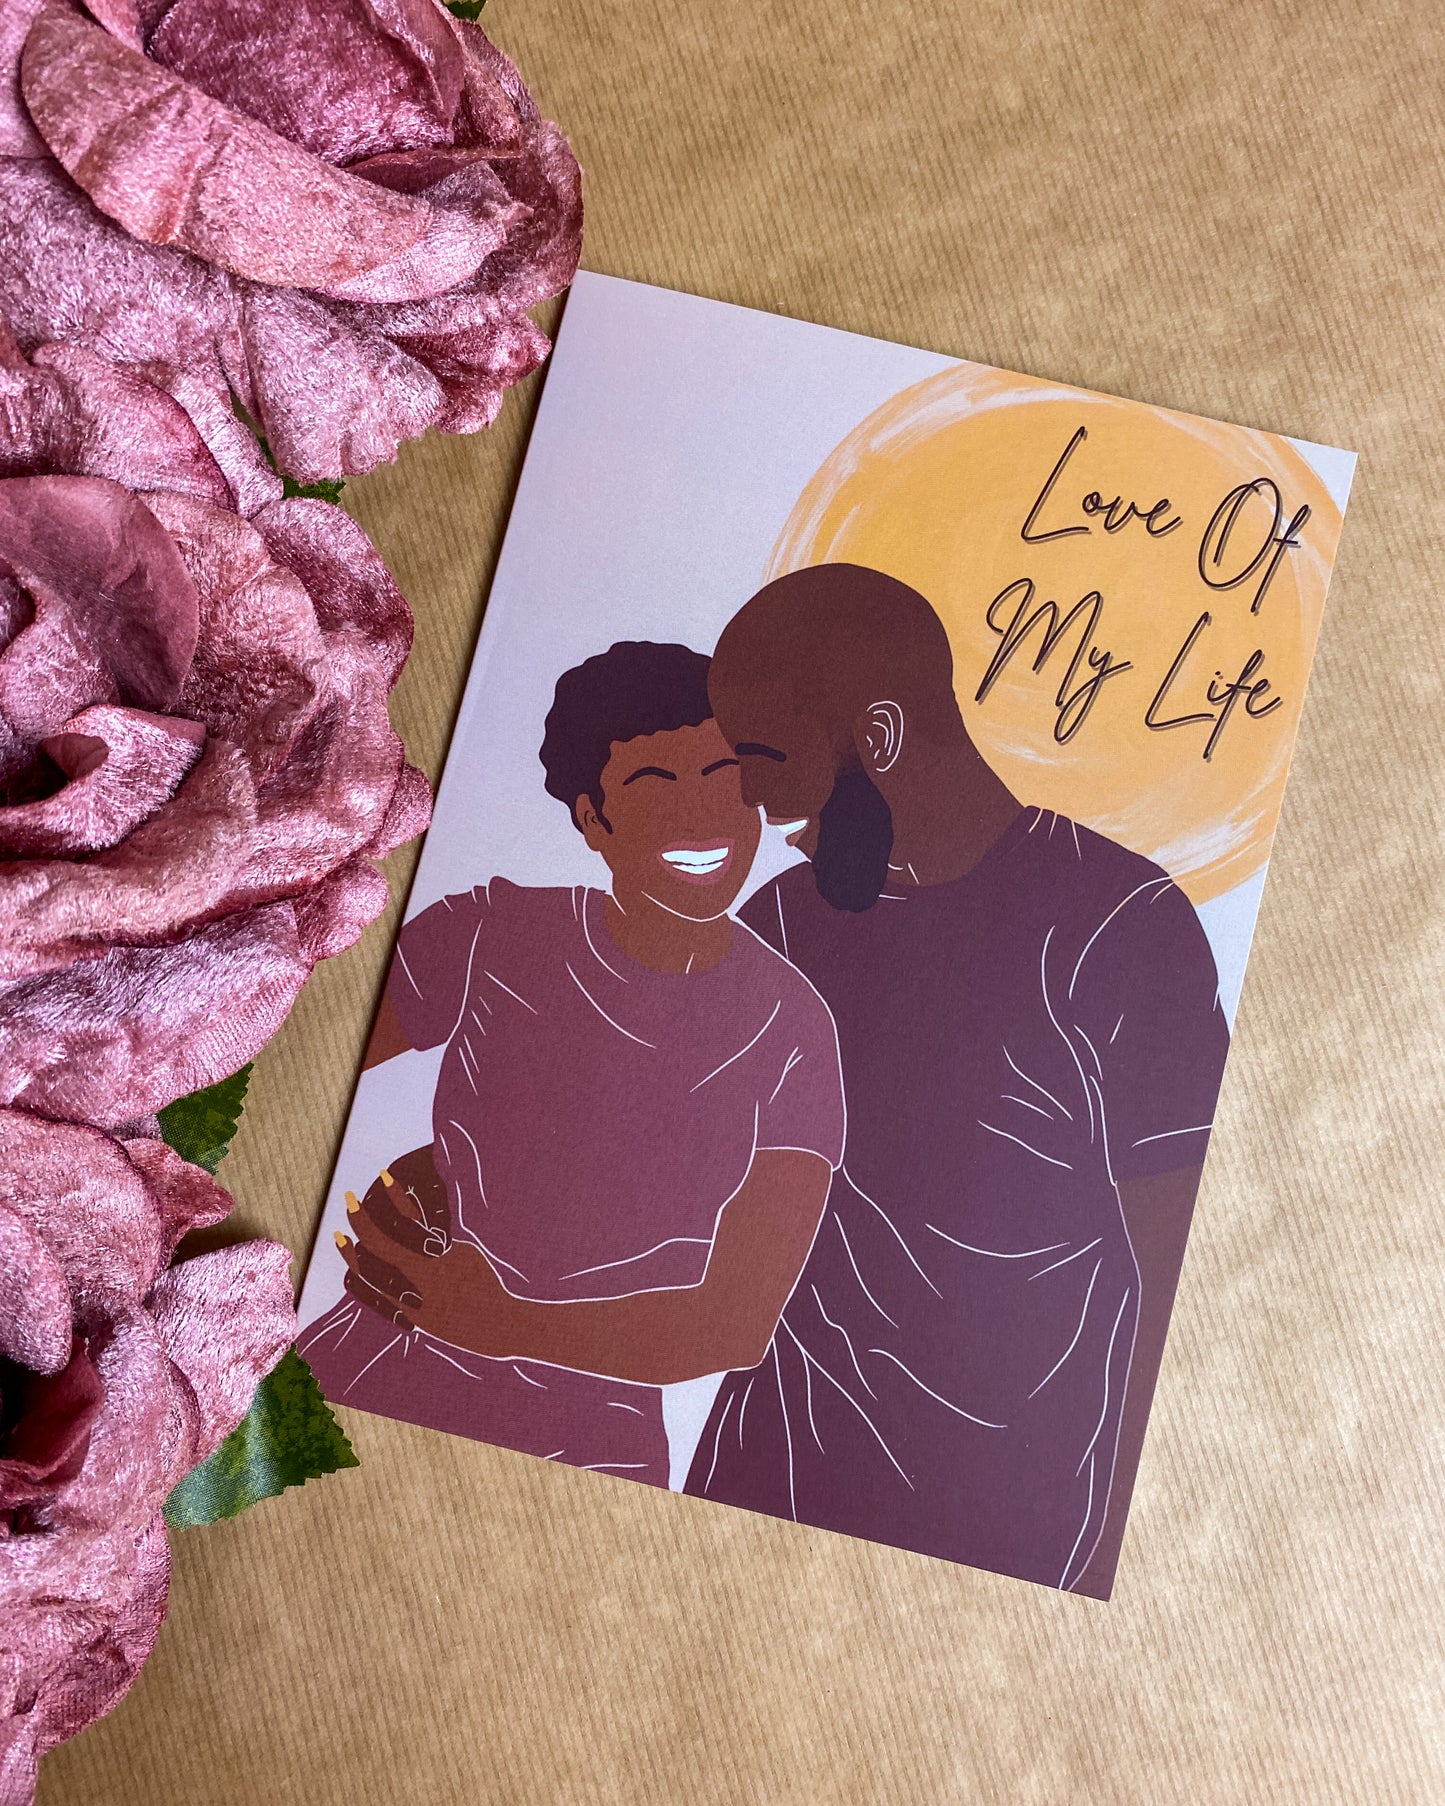 Love Of My Life - Black Love Couple Greetings Card